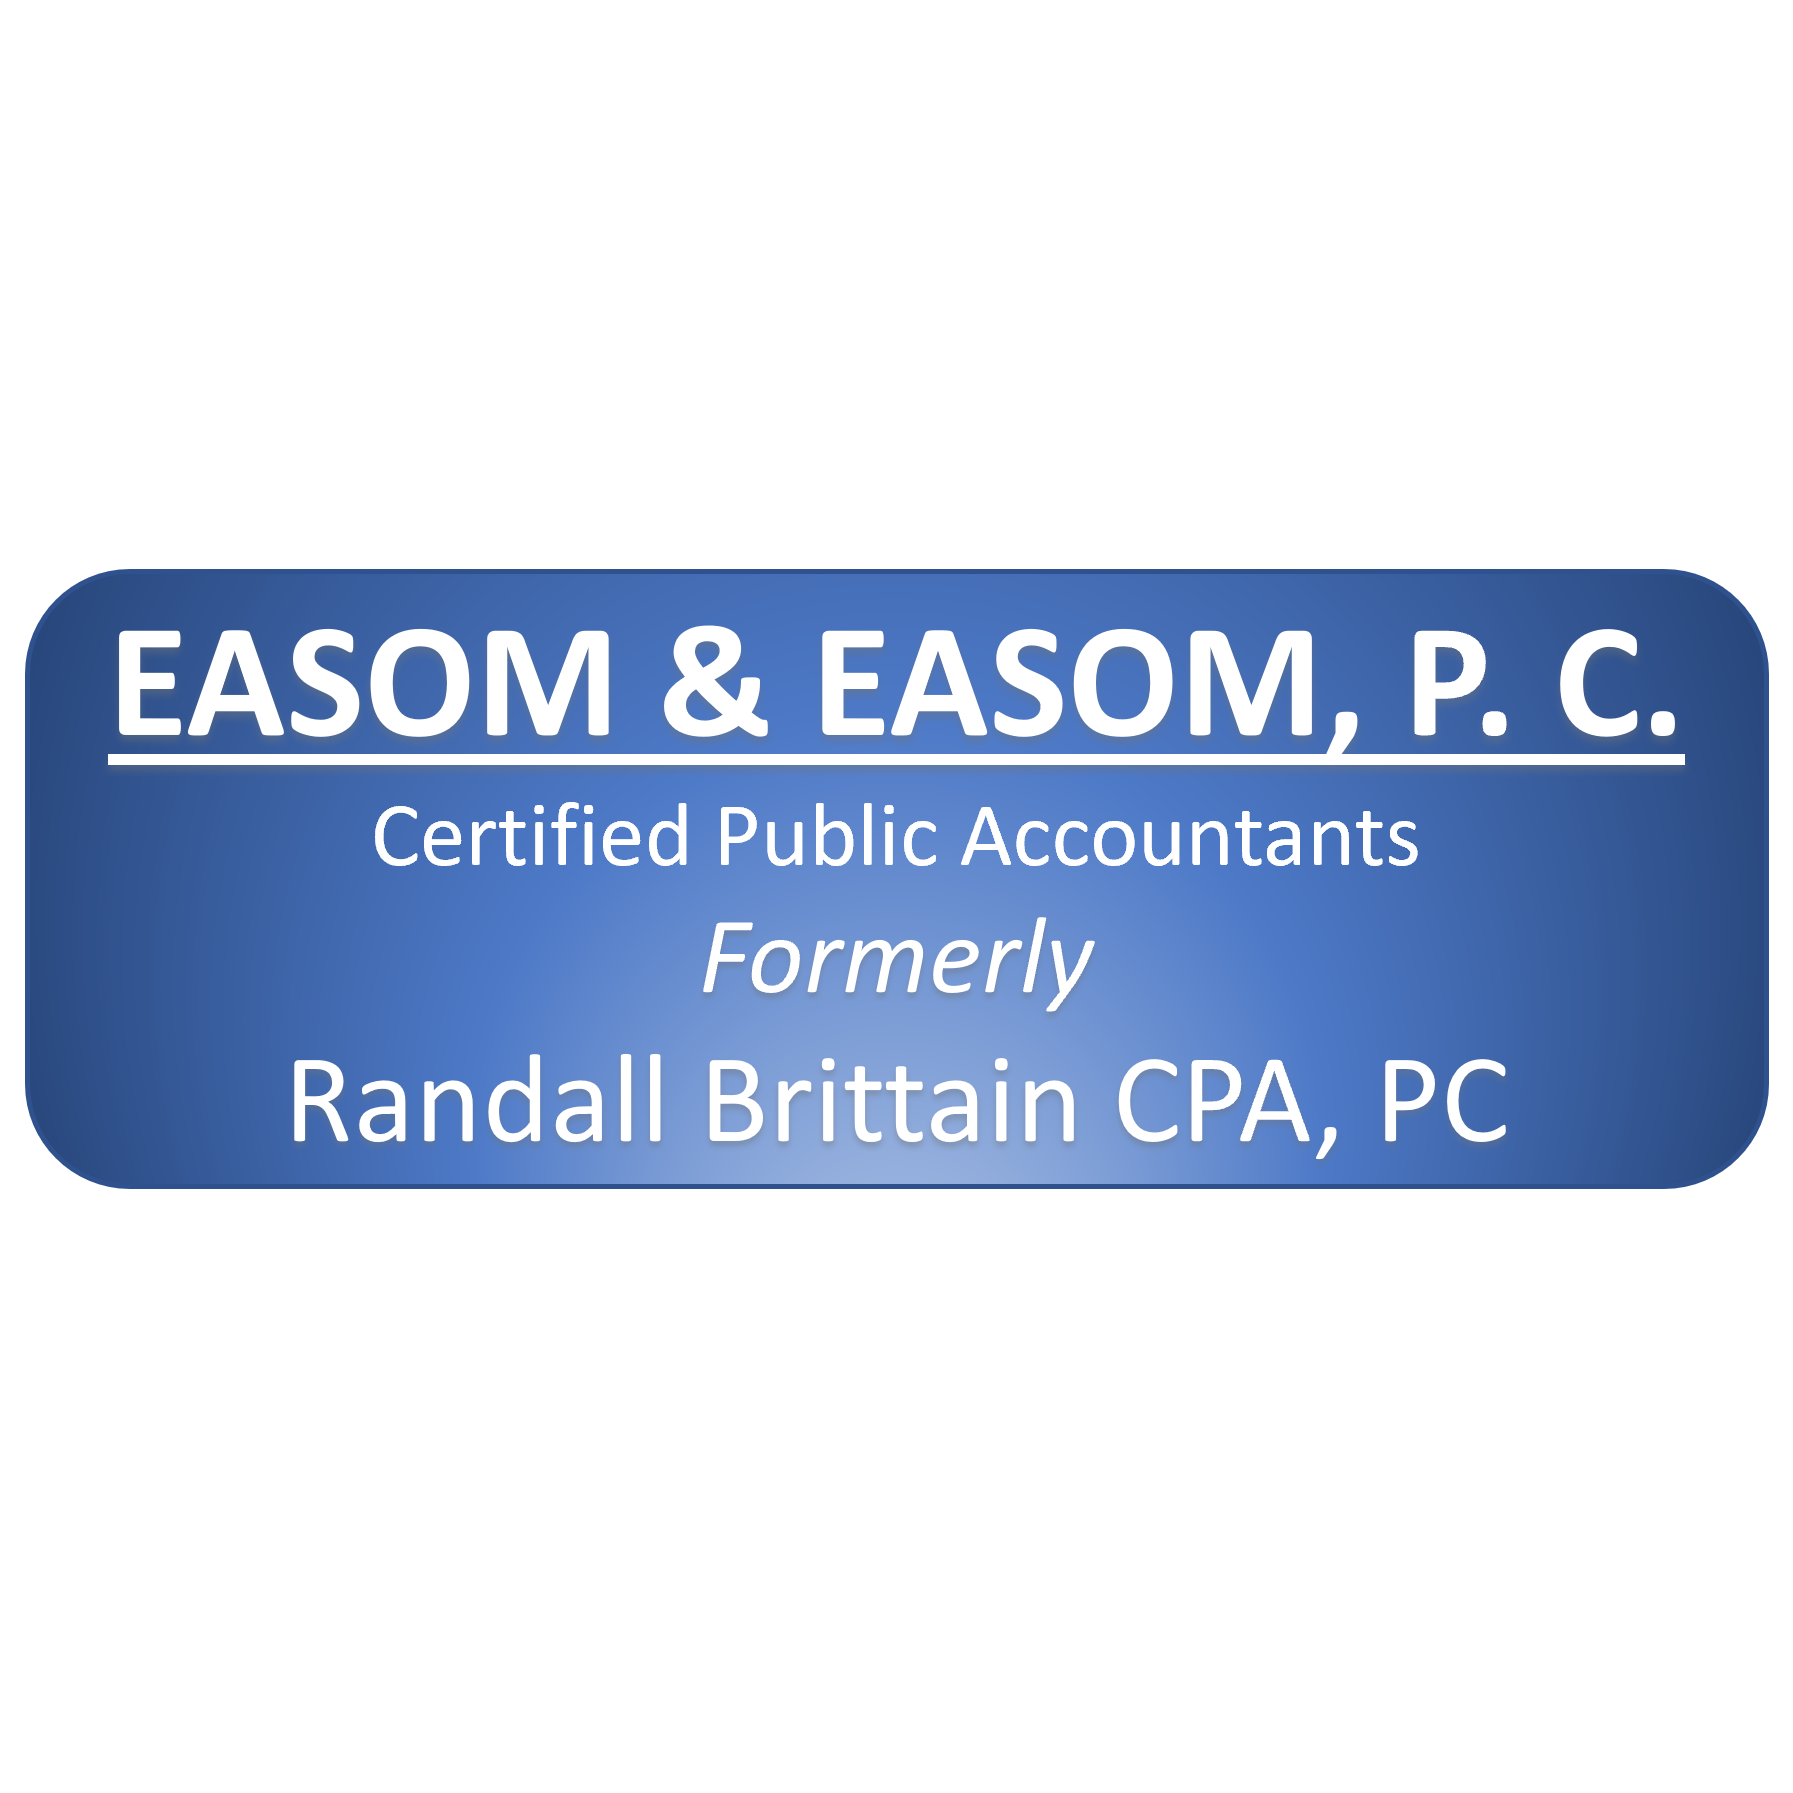 EASOM & EASOM, P. C., formerly Randall Brittain CPA, PC